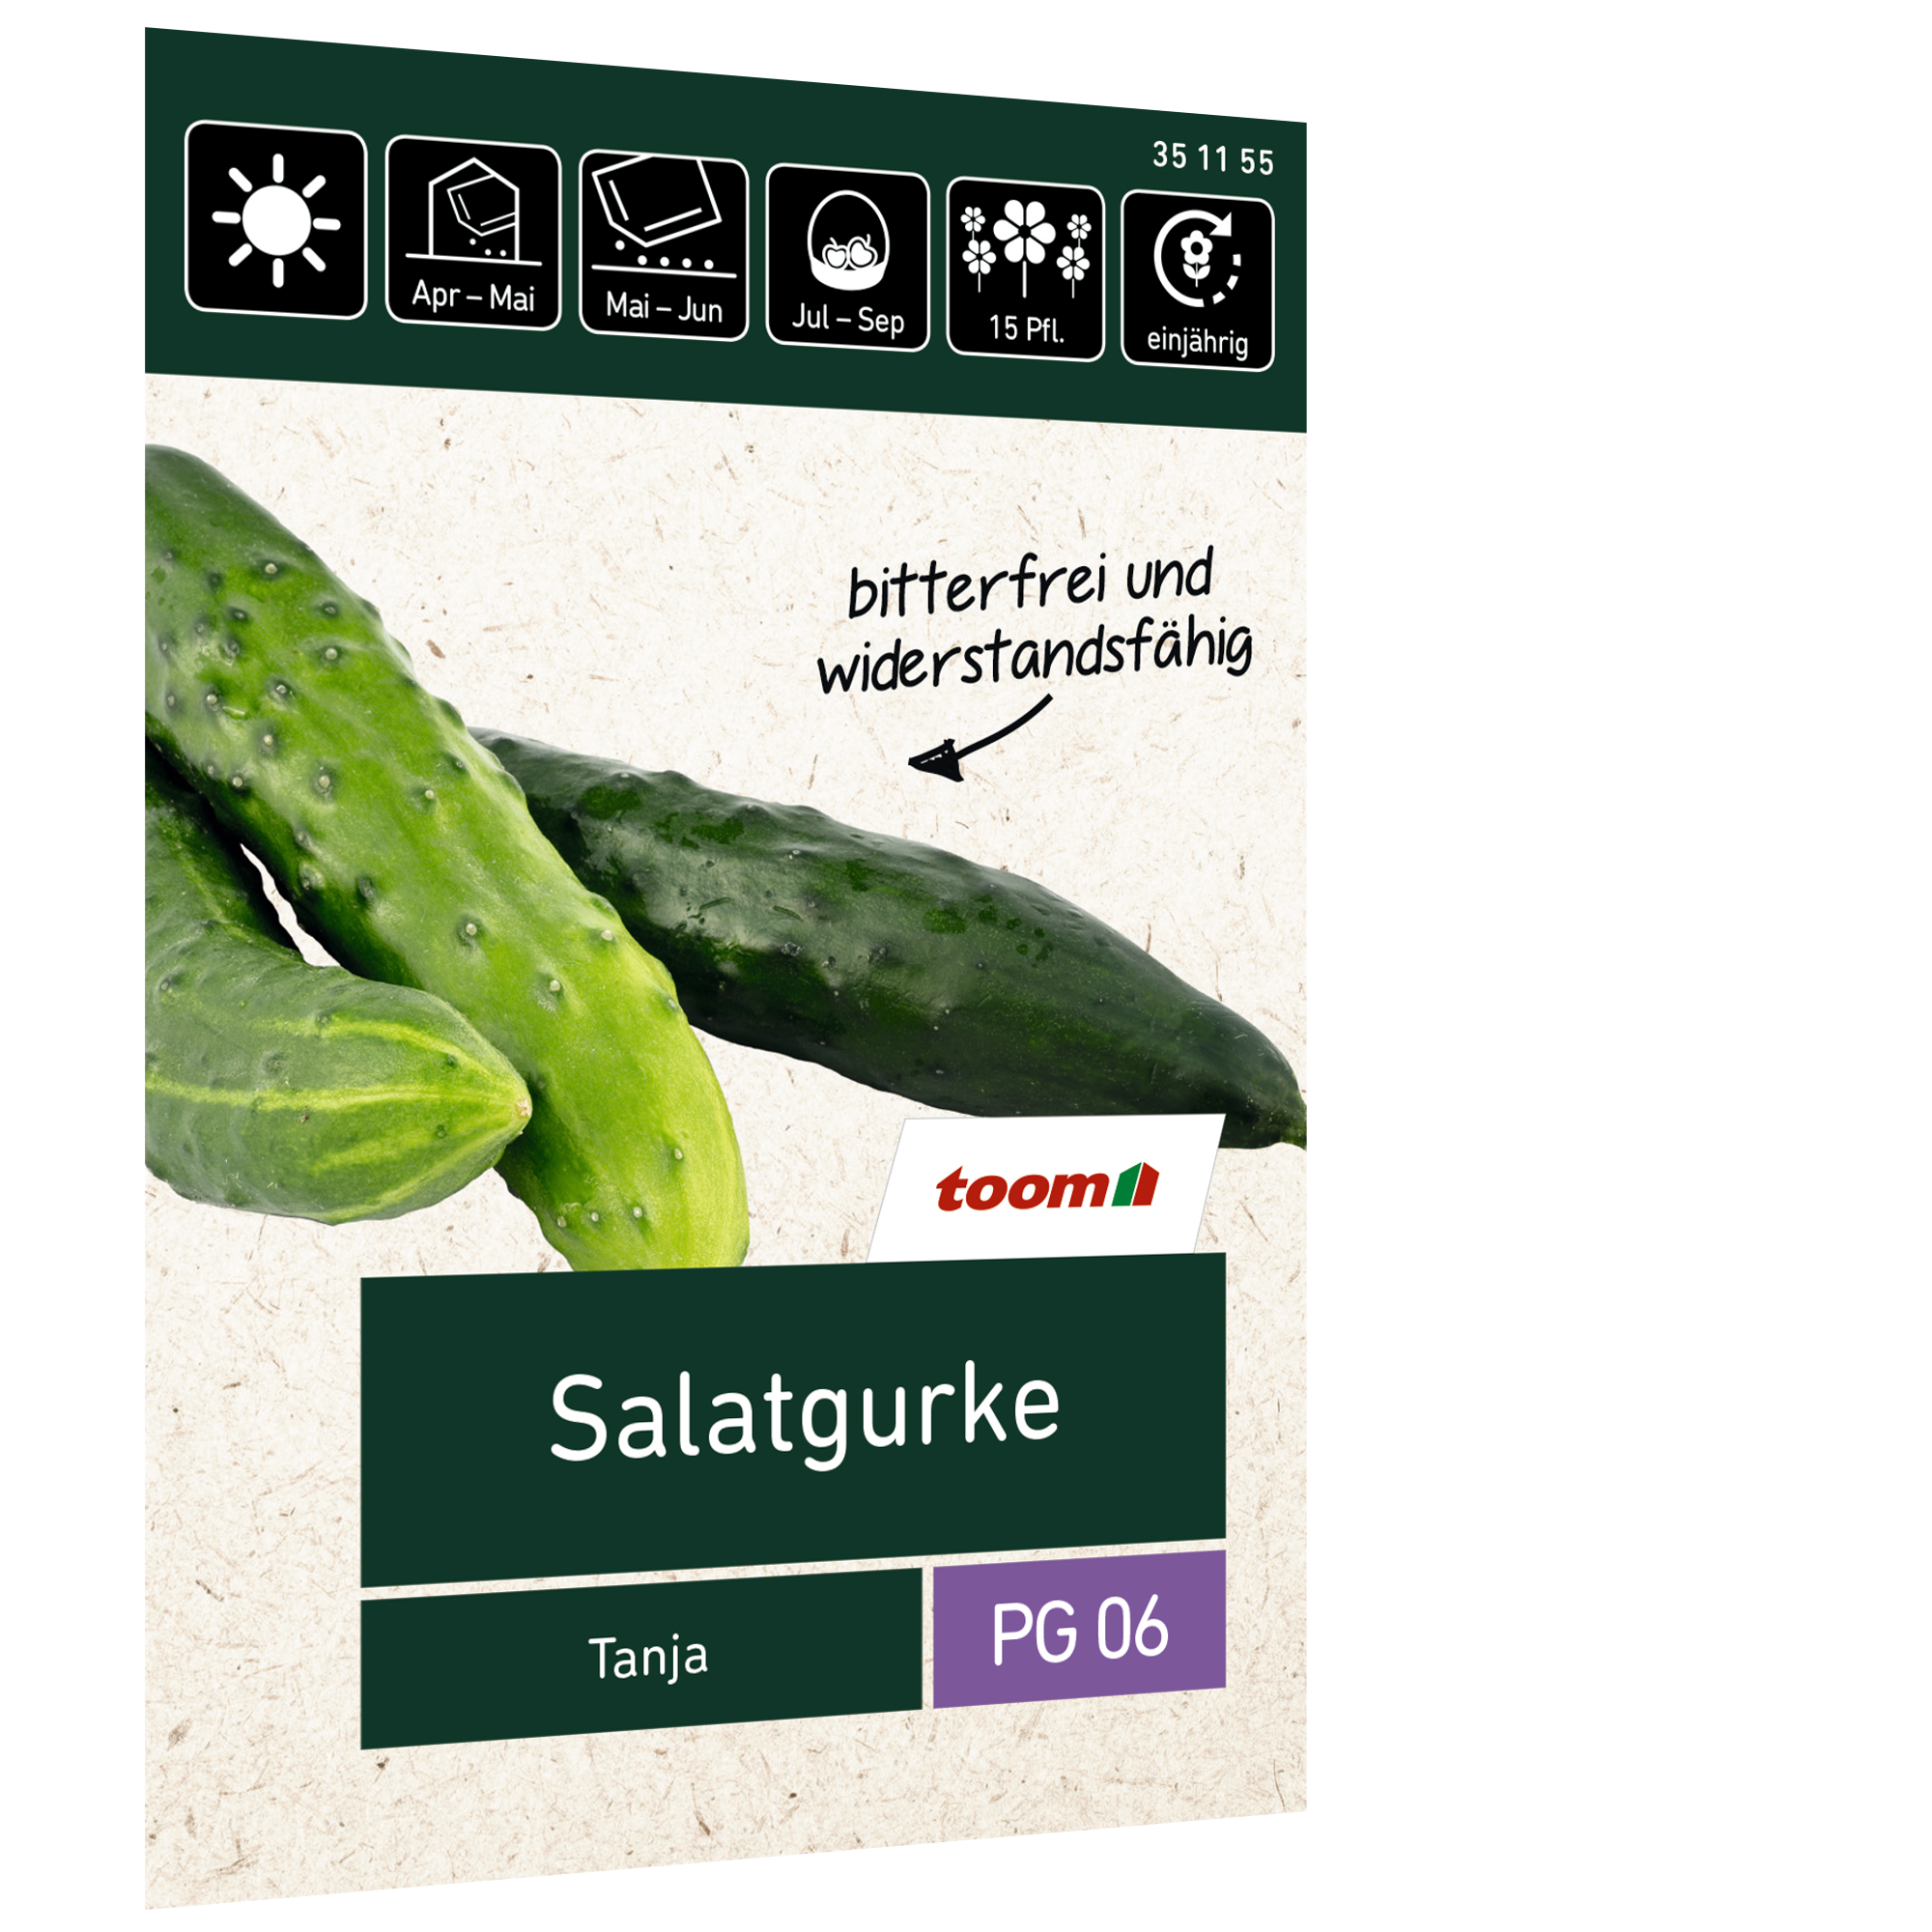 Salatgurke 'Tanja' + product picture